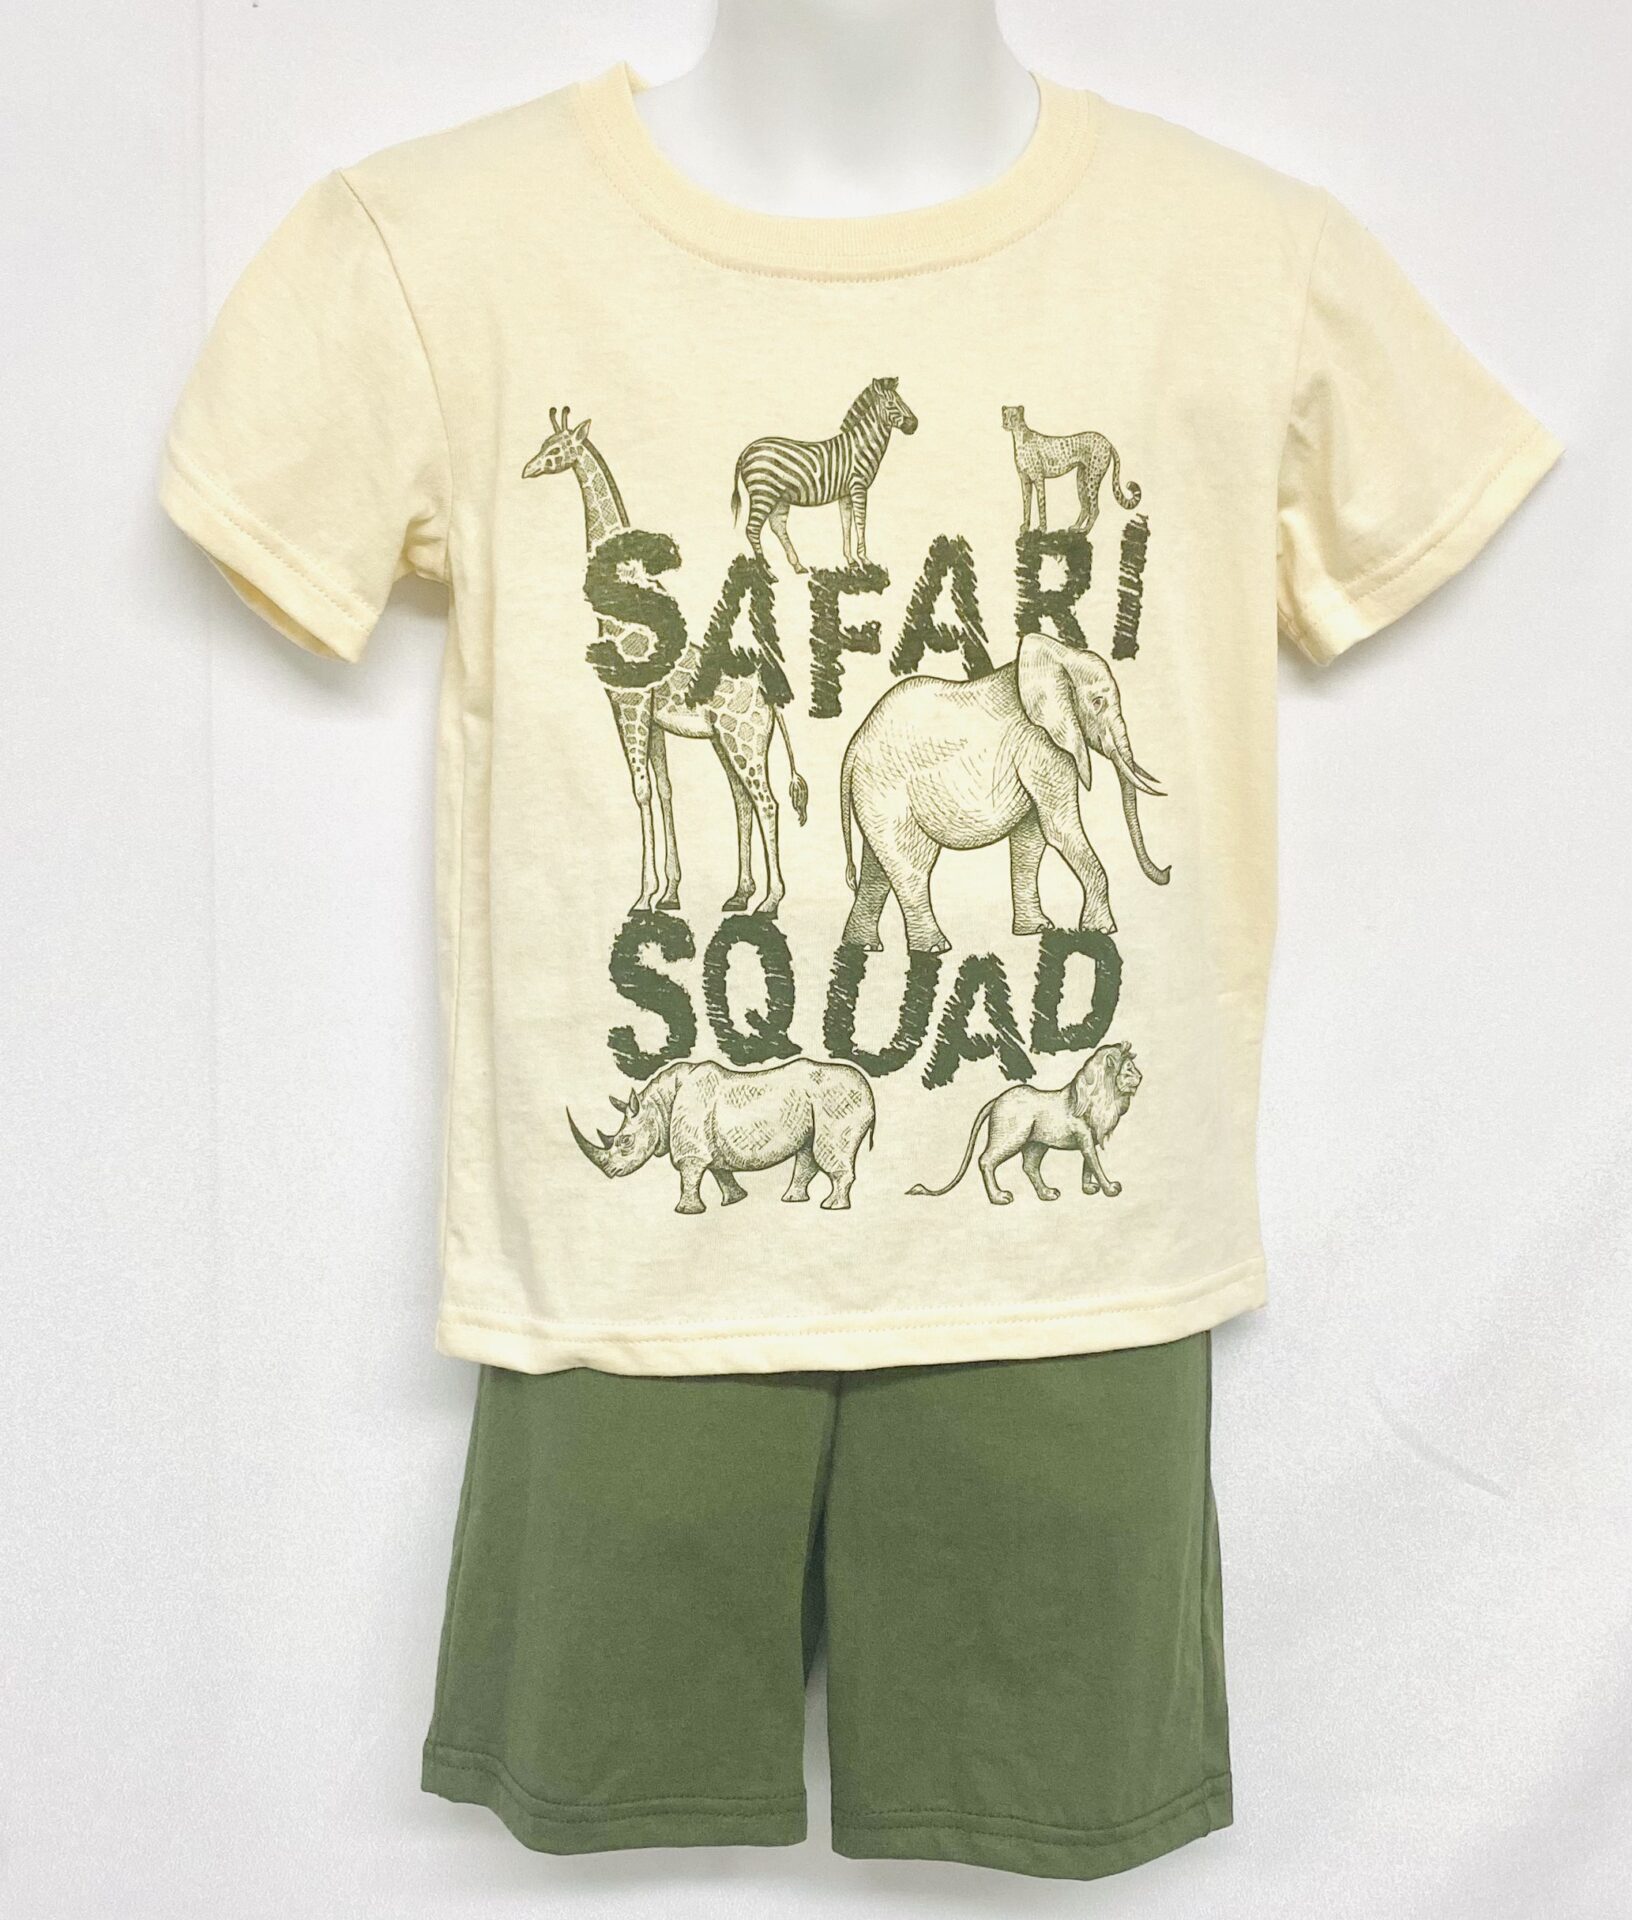 A safari squad animal graphic printed shirt